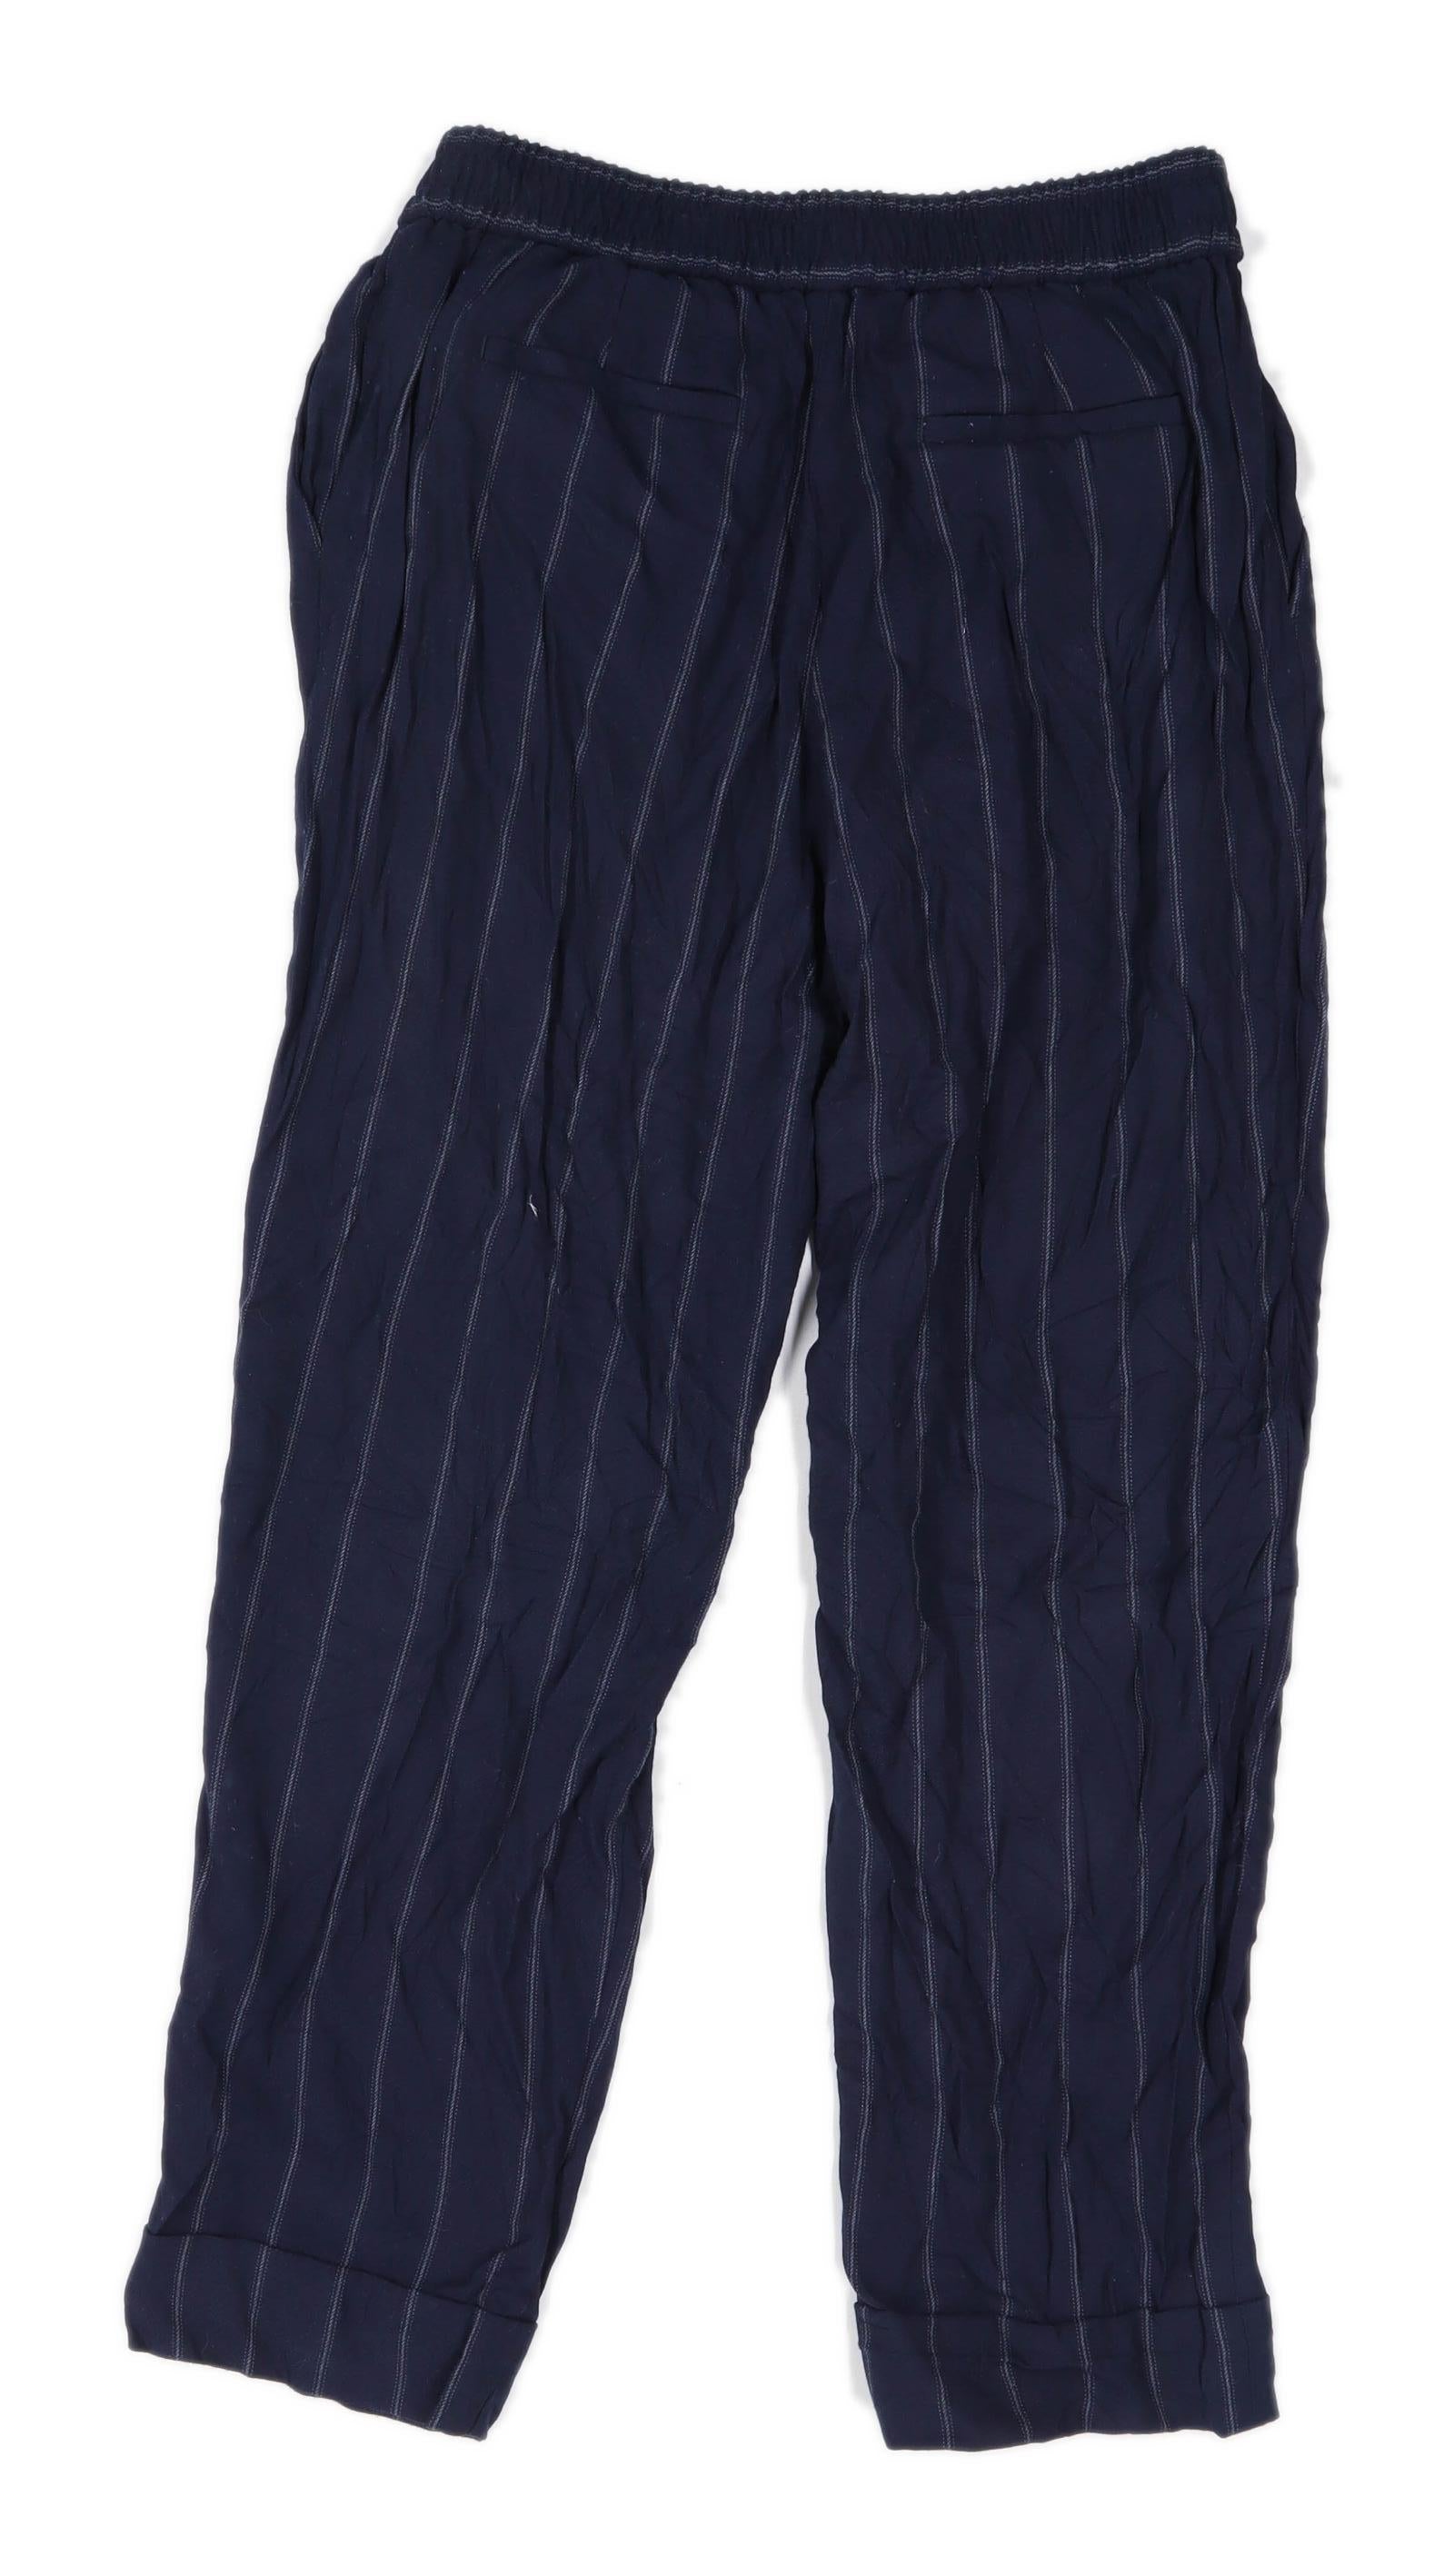 Massimo Dutti STRAIGHT-FIT BLEND - Trousers - dark blue - Zalando.co.uk